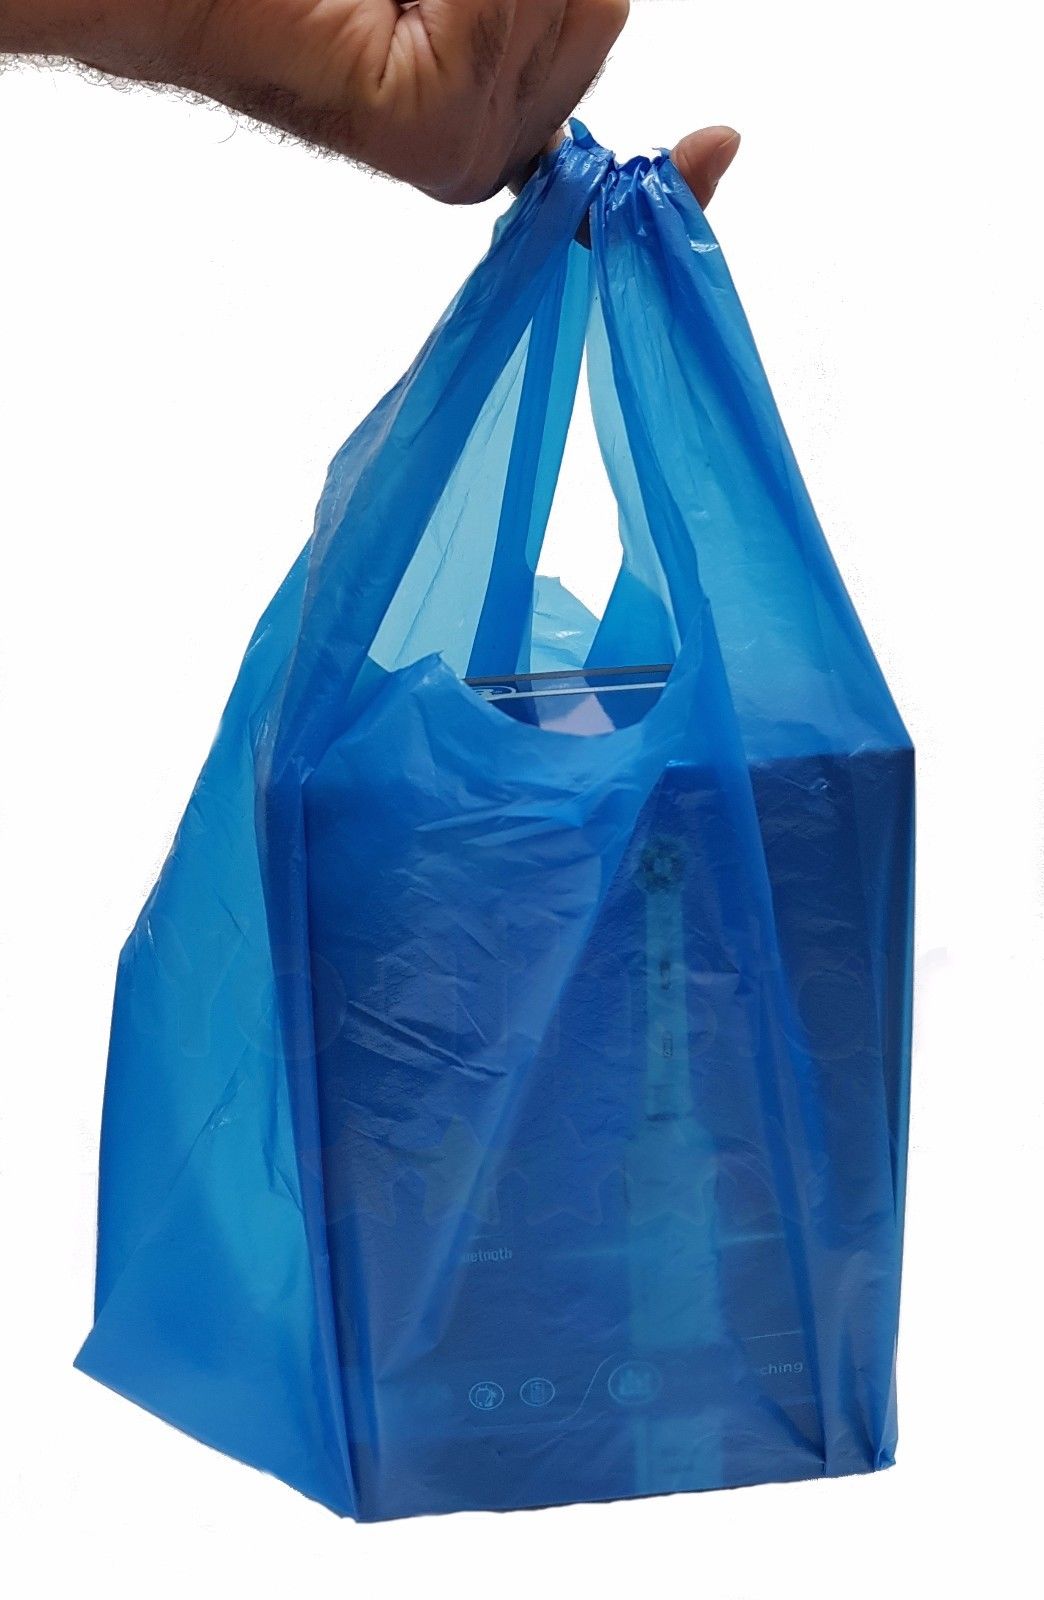 15 Plastic carrier bag with handles (kg): $134.50